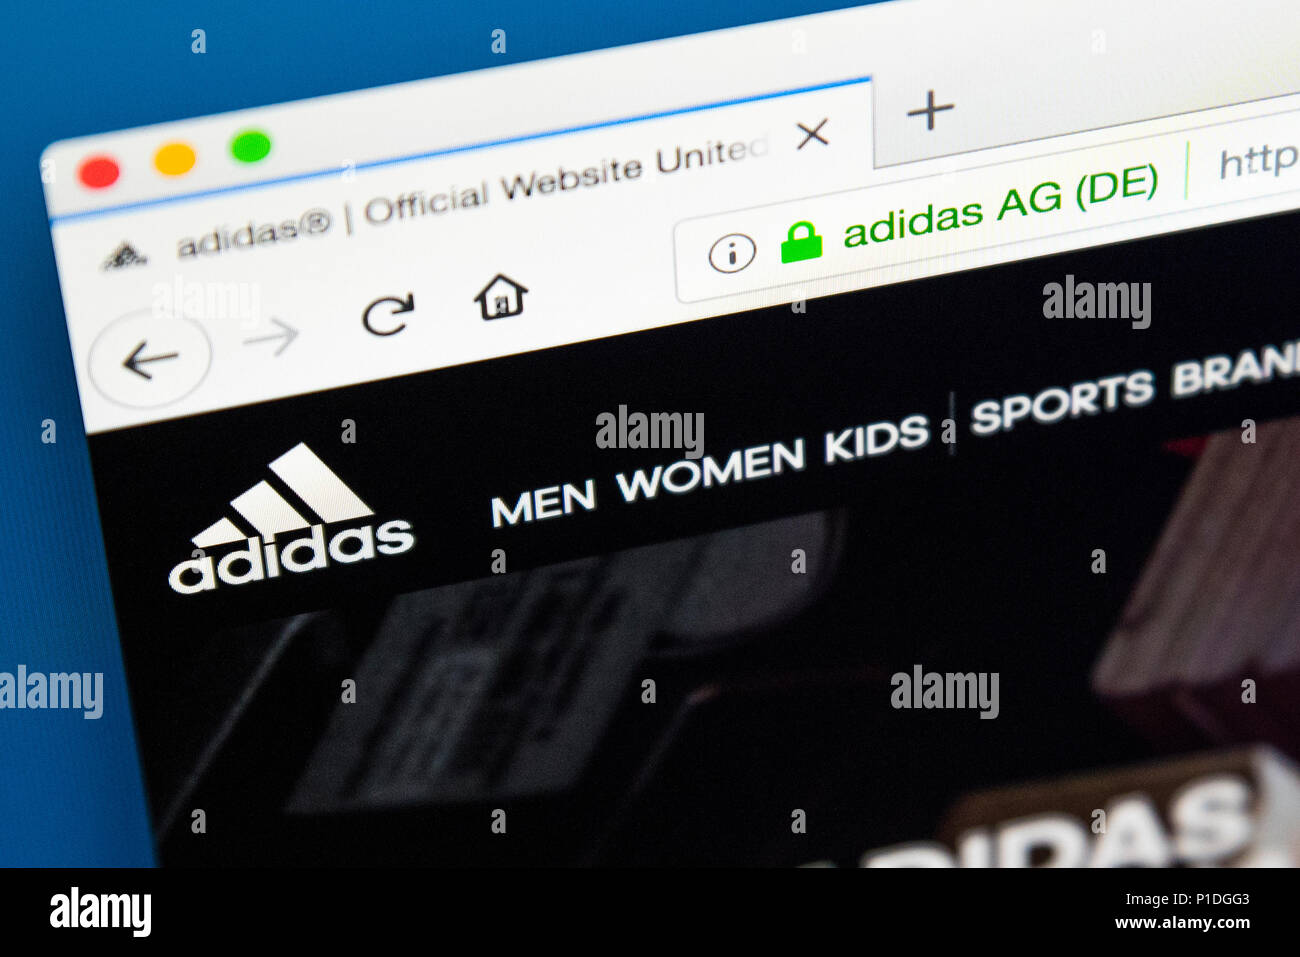 adidas Official Website UK